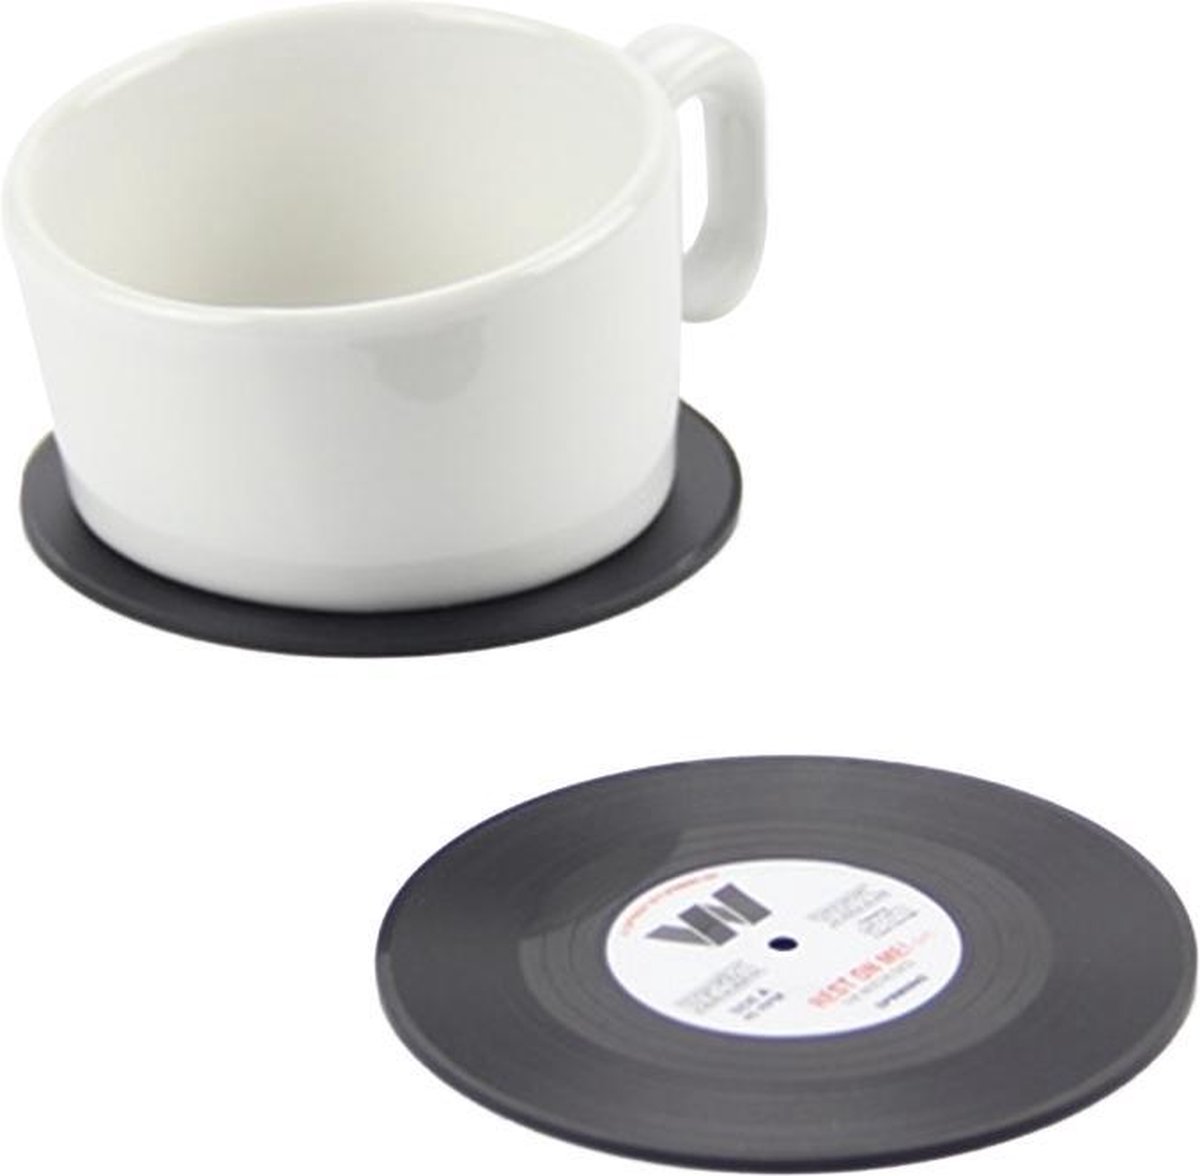 6 stuks/Set Retro zwart Vinyl CD Record Drink Coasters Home tabel Cup Mat Decor koffie drinken Placemat tafelgerei spinnen Diameter: 10.7cm